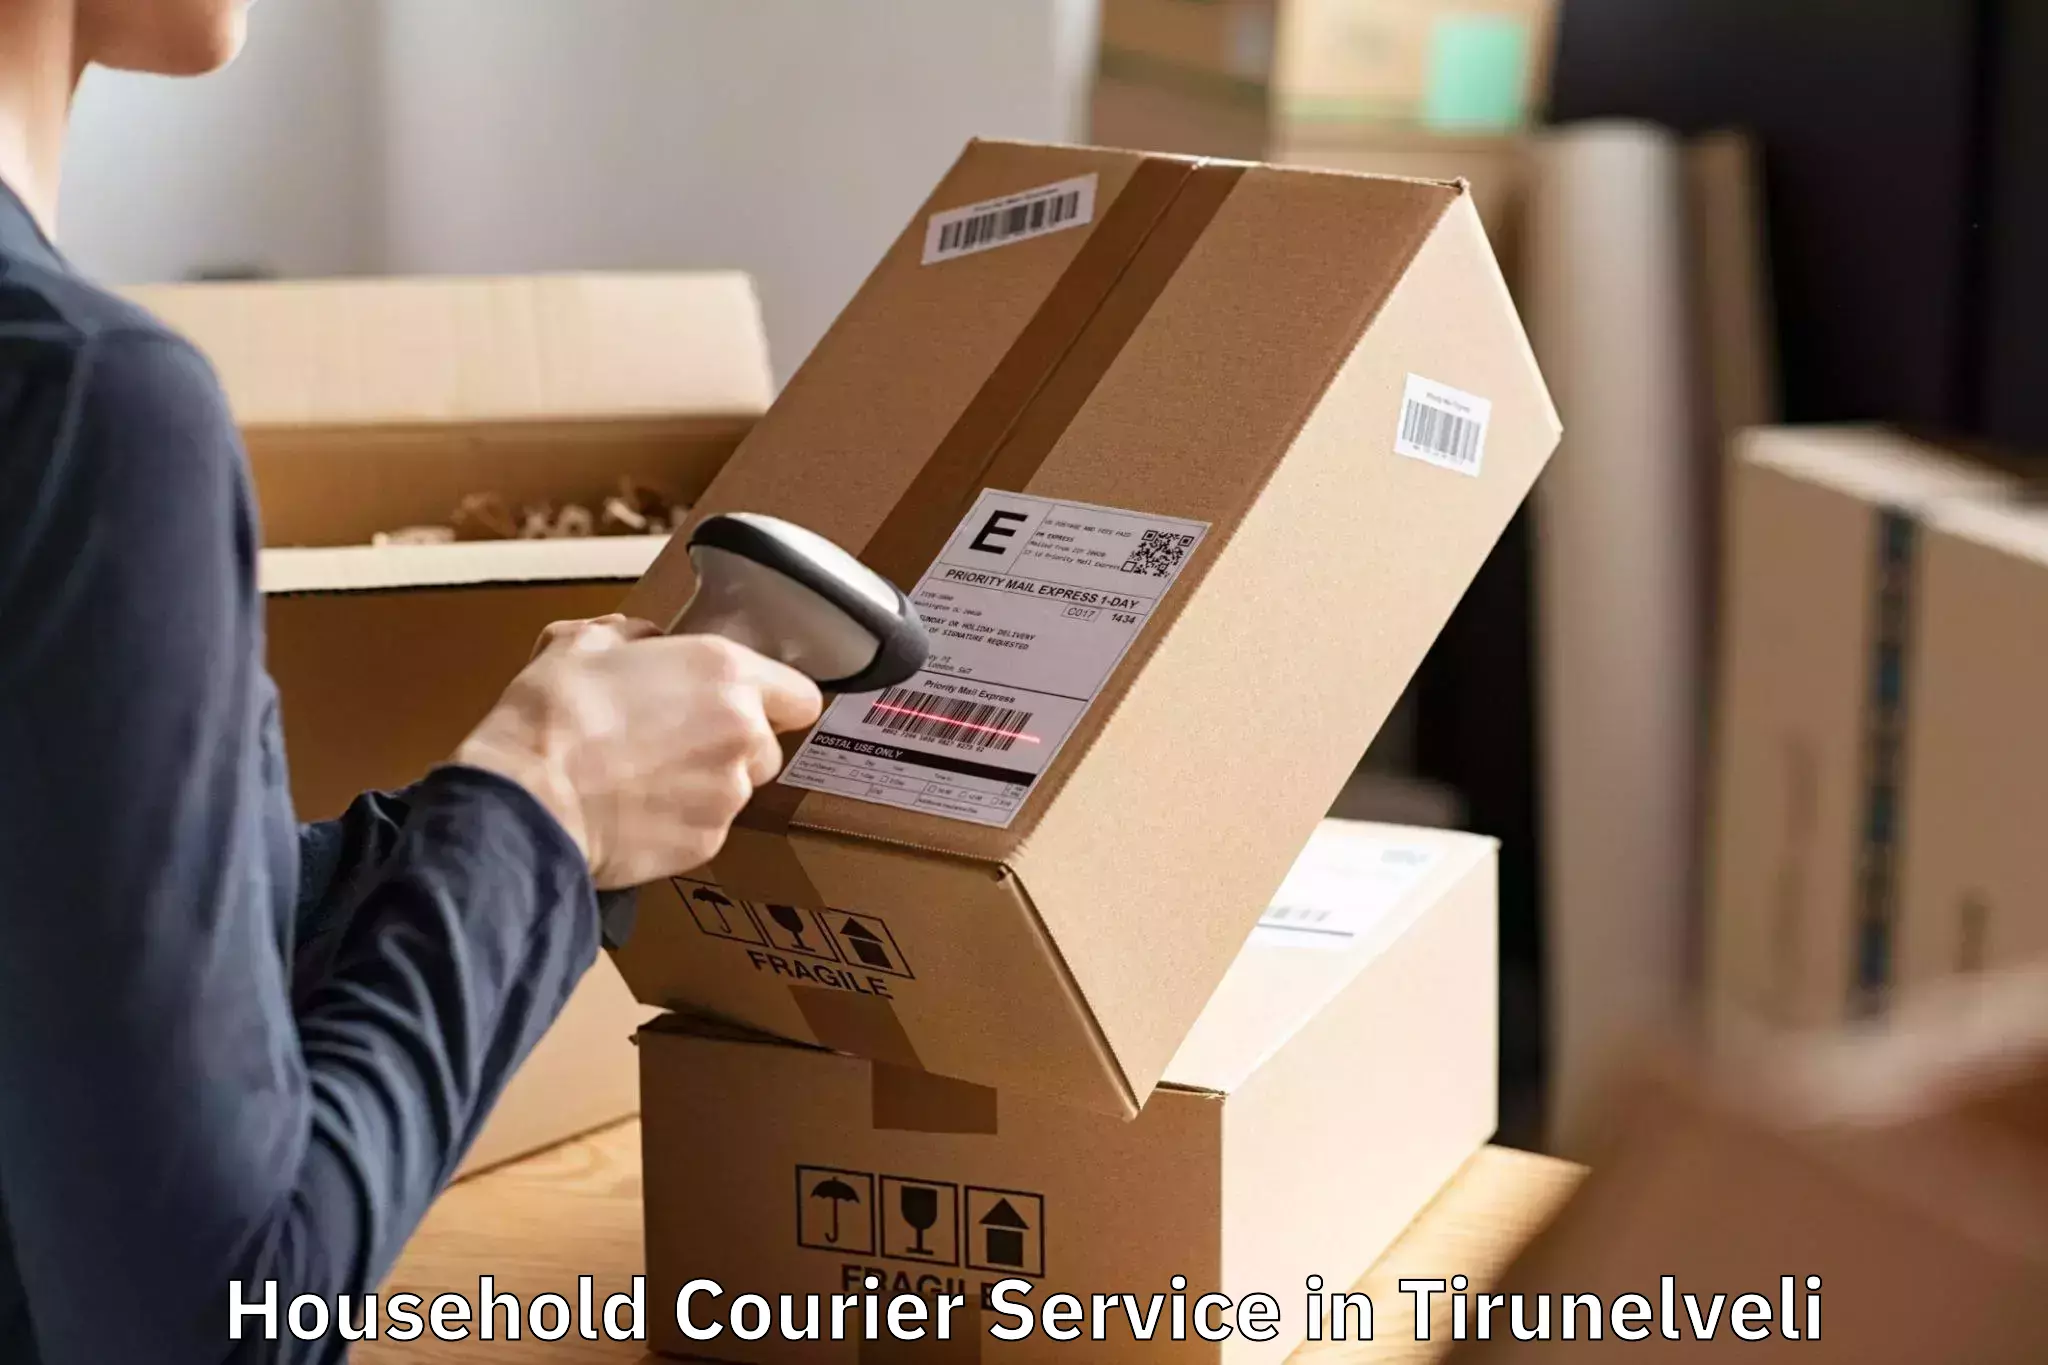 Easy Household Courier Service Booking in Tirunelveli, Tamil Nadu (TN)